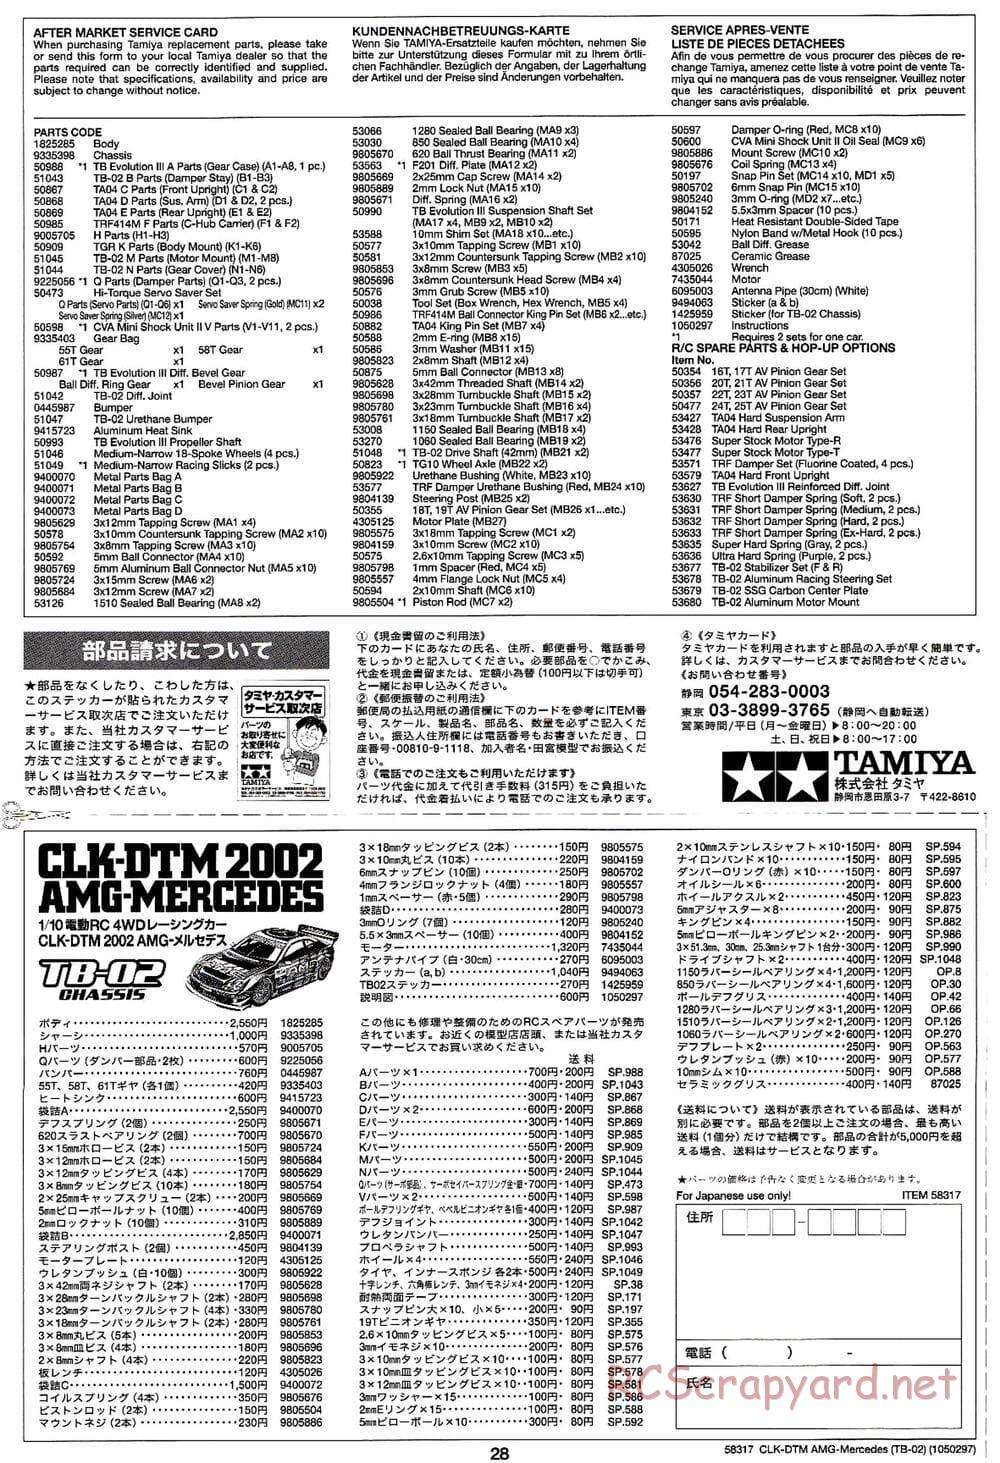 Tamiya - CLK DTM 2002 AMG Mercedes - TB-02 Chassis - Manual - Page 28